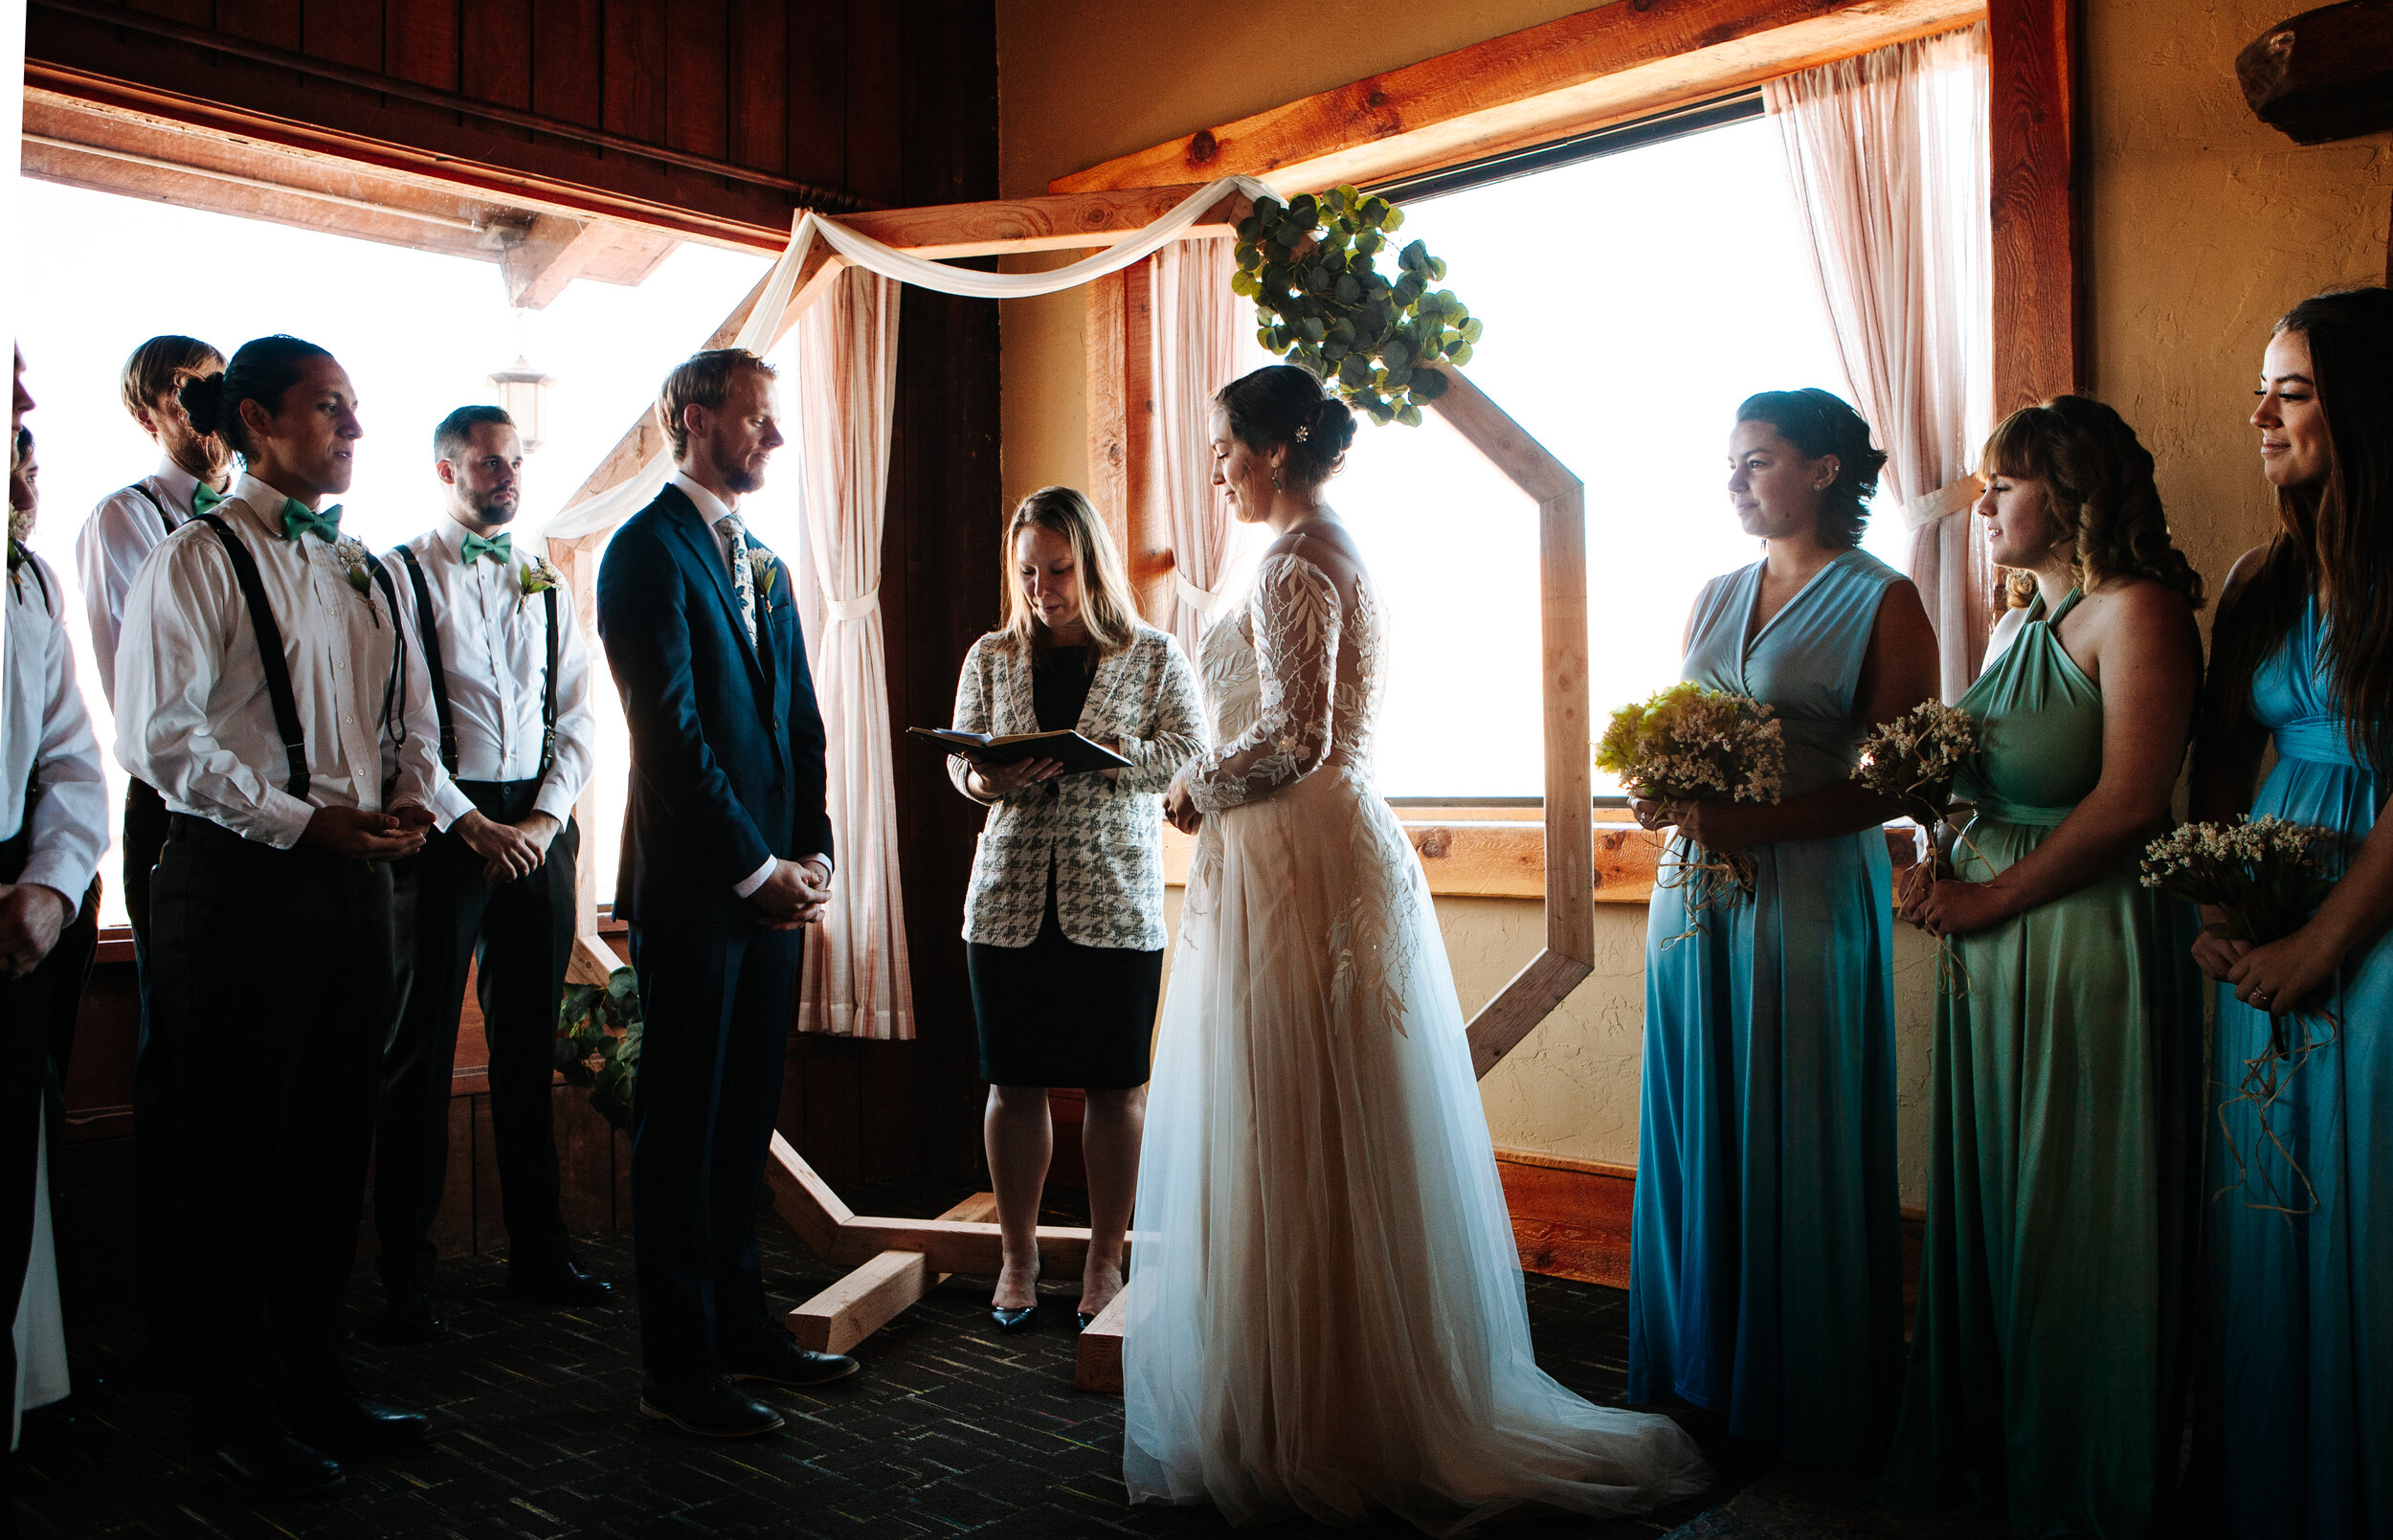 Indoor wedding ceremony near Moab, Utah.